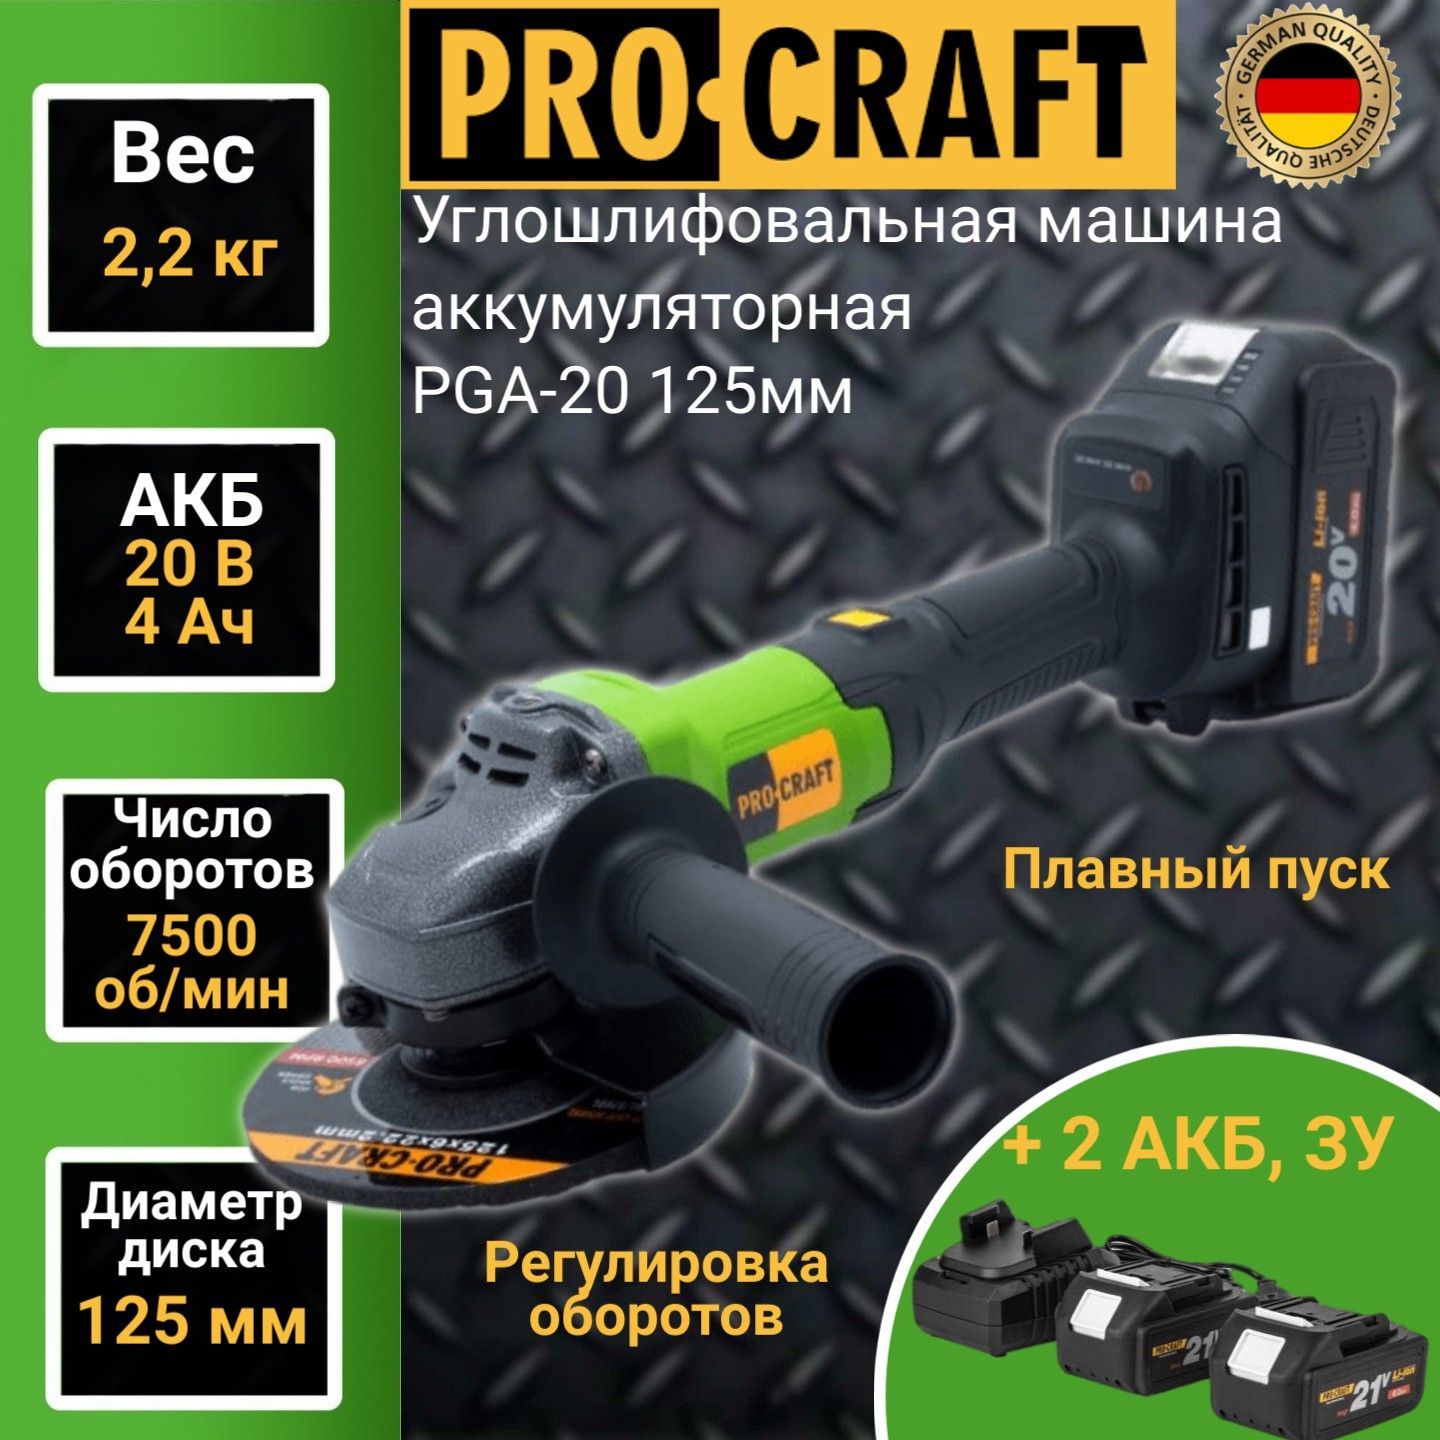 Углошлифовальная машина болгарка аккумуляторная ProСraft PGA-20, 125мм круг, 2 АКБ+ЗУ, аккумуляторная ушм болгарка crown